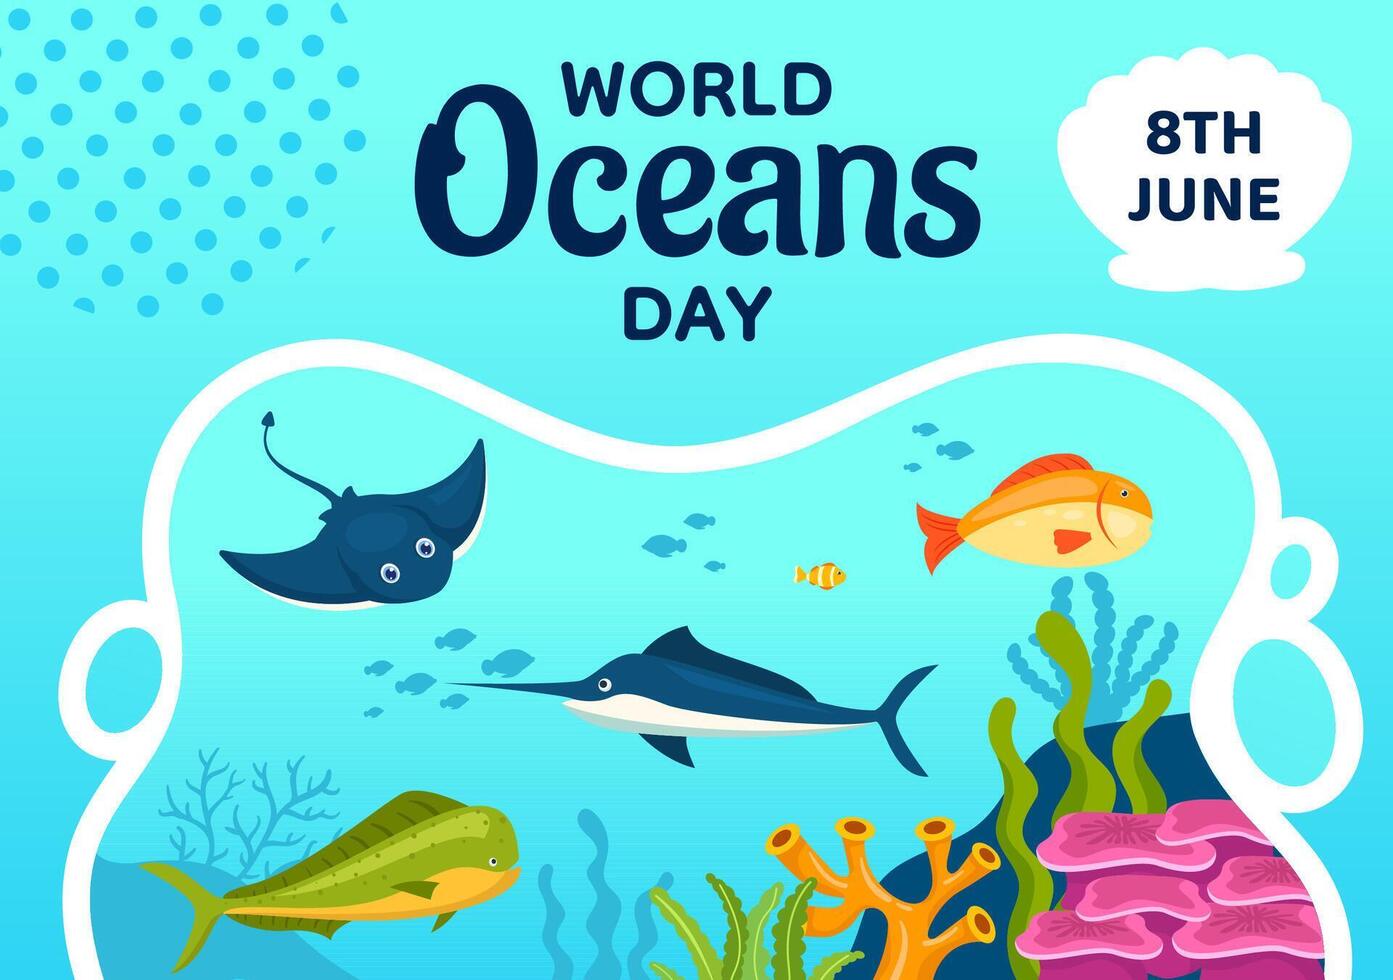 Oceans Day Social Media Background Flat Cartoon Hand Drawn Templates Illustration vector